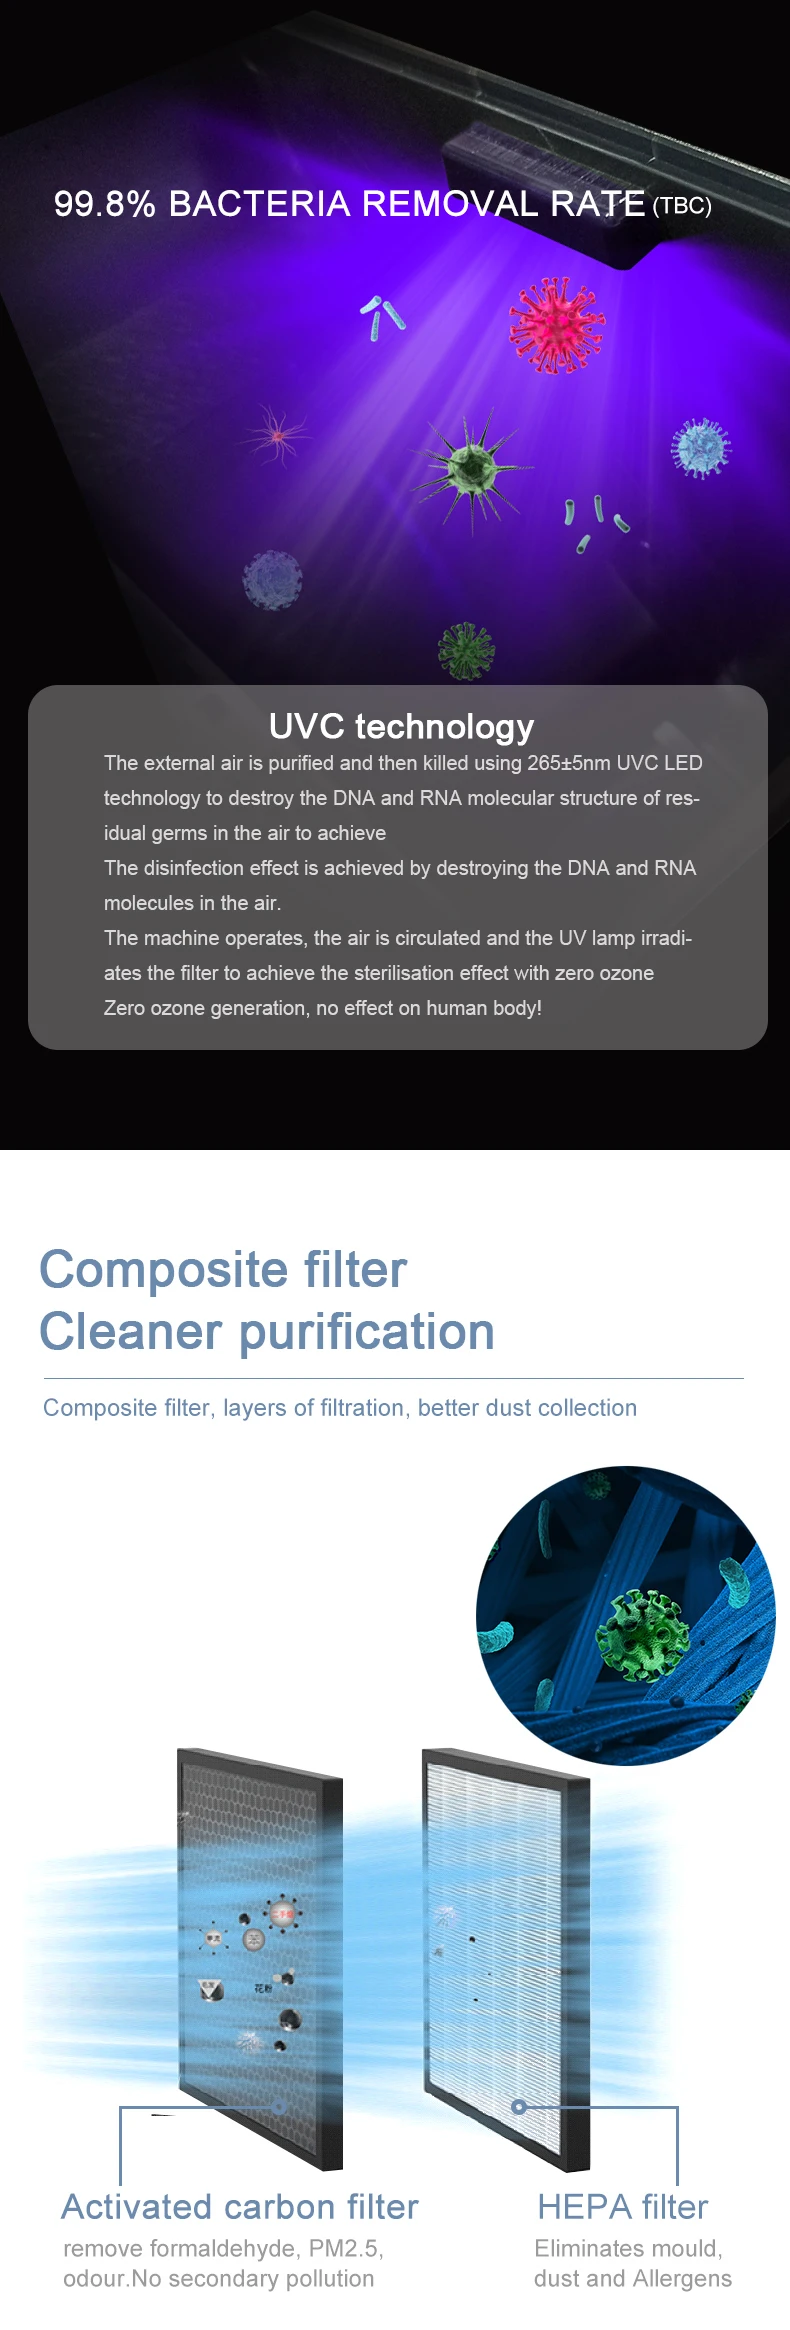 Composite filter